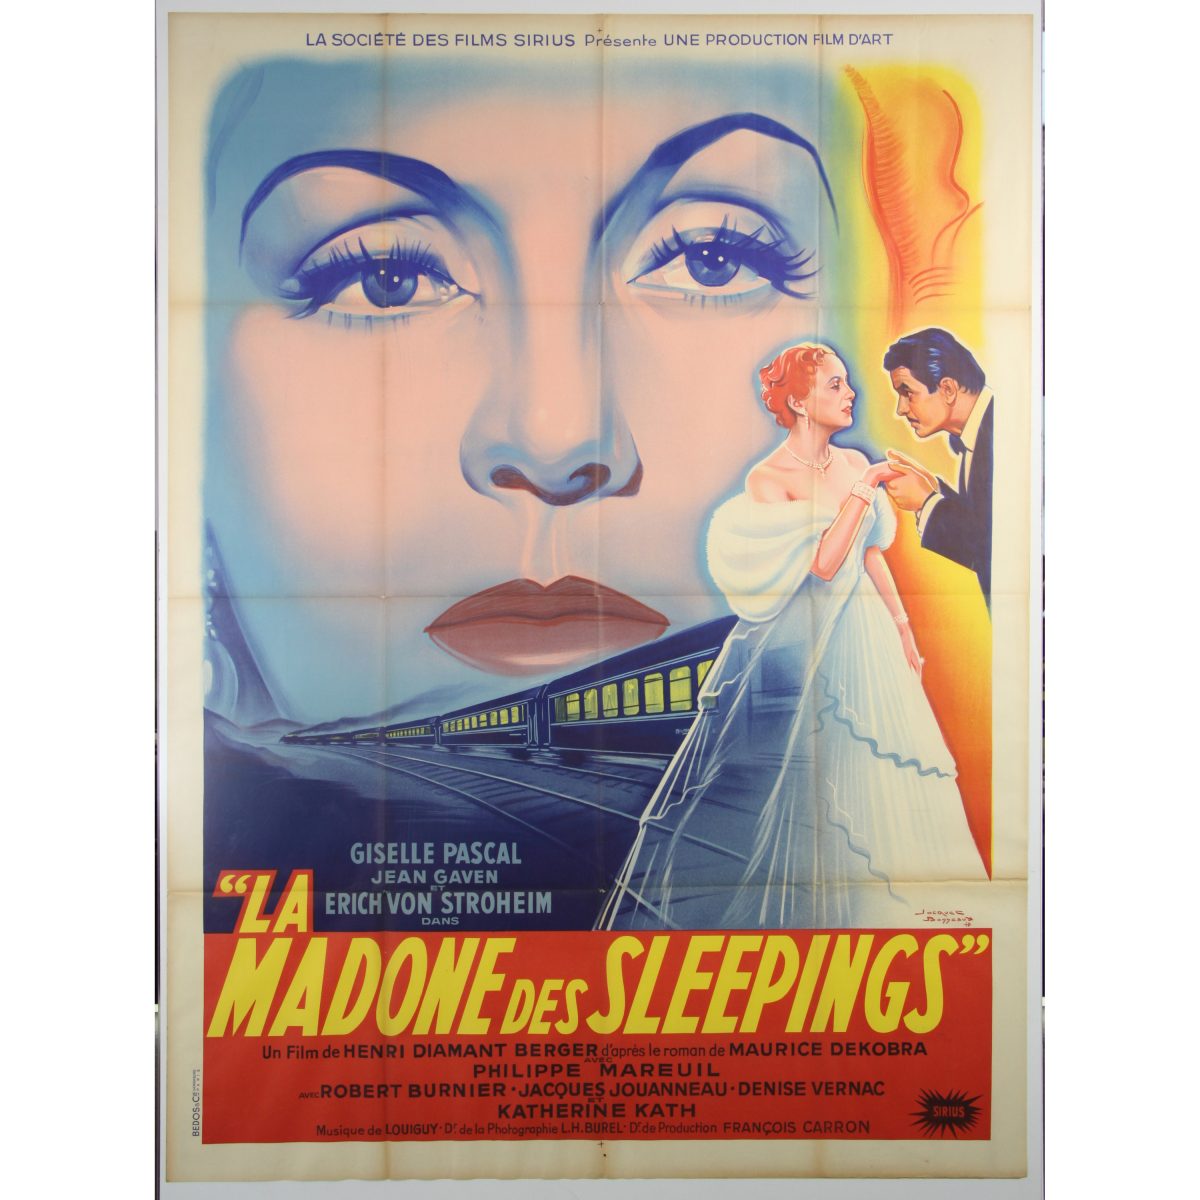 Movie poster 20220501-madonne-des-sleepings-gr-fr